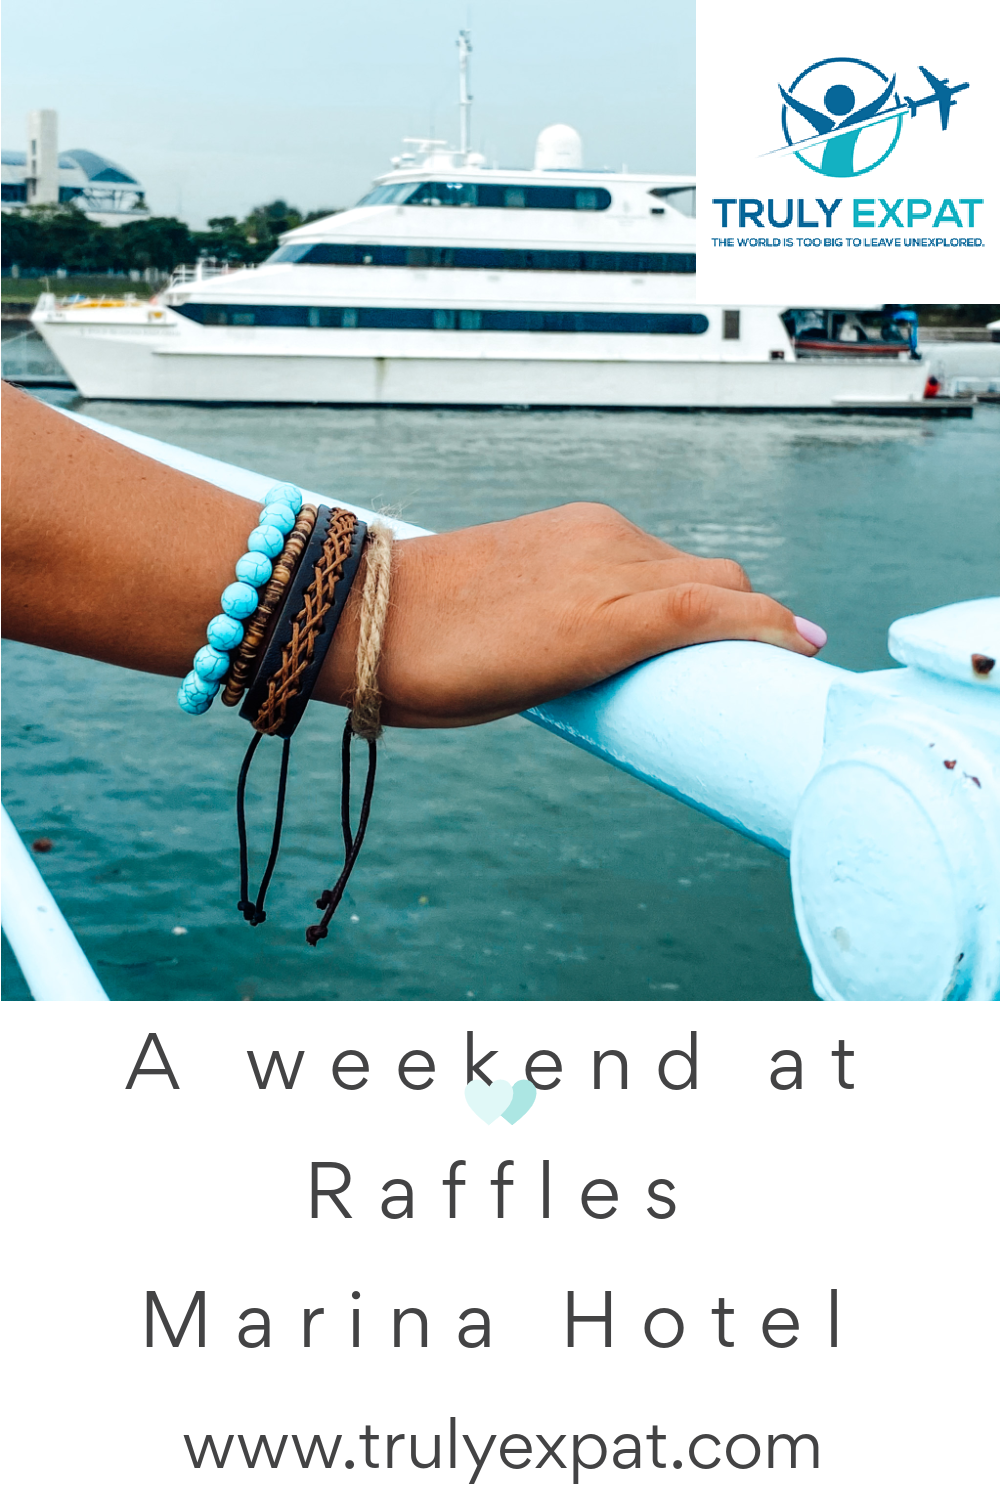 A weekend at Raffles Marina